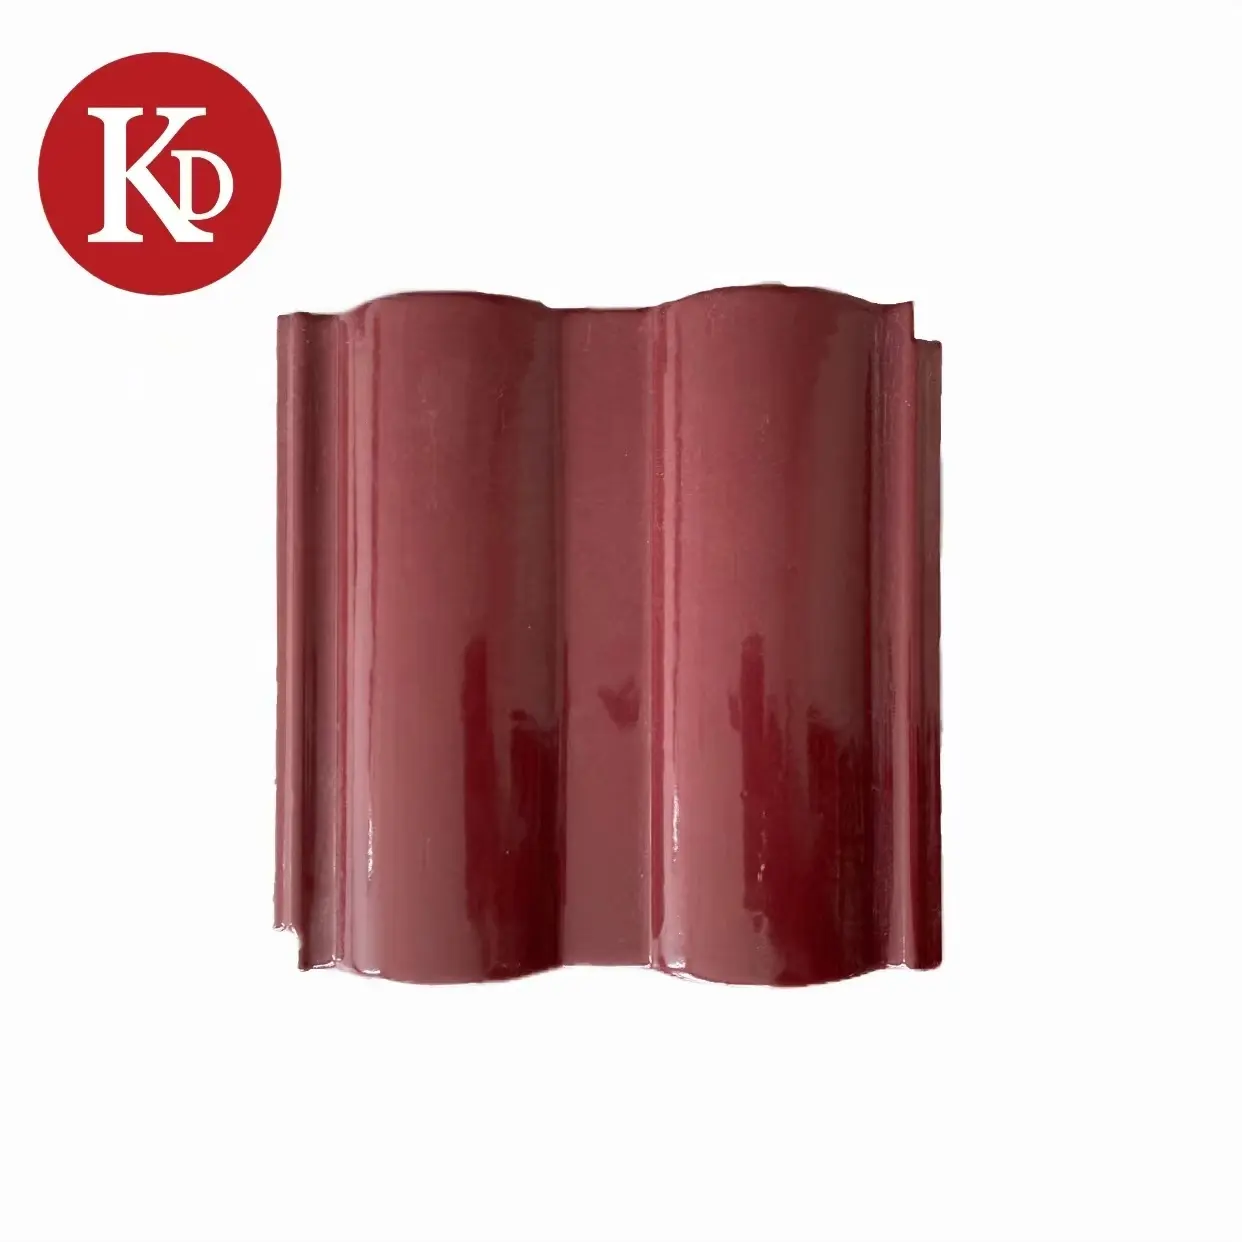 Tegole in ceramica lucida rossa a doppia canna 200x200mm